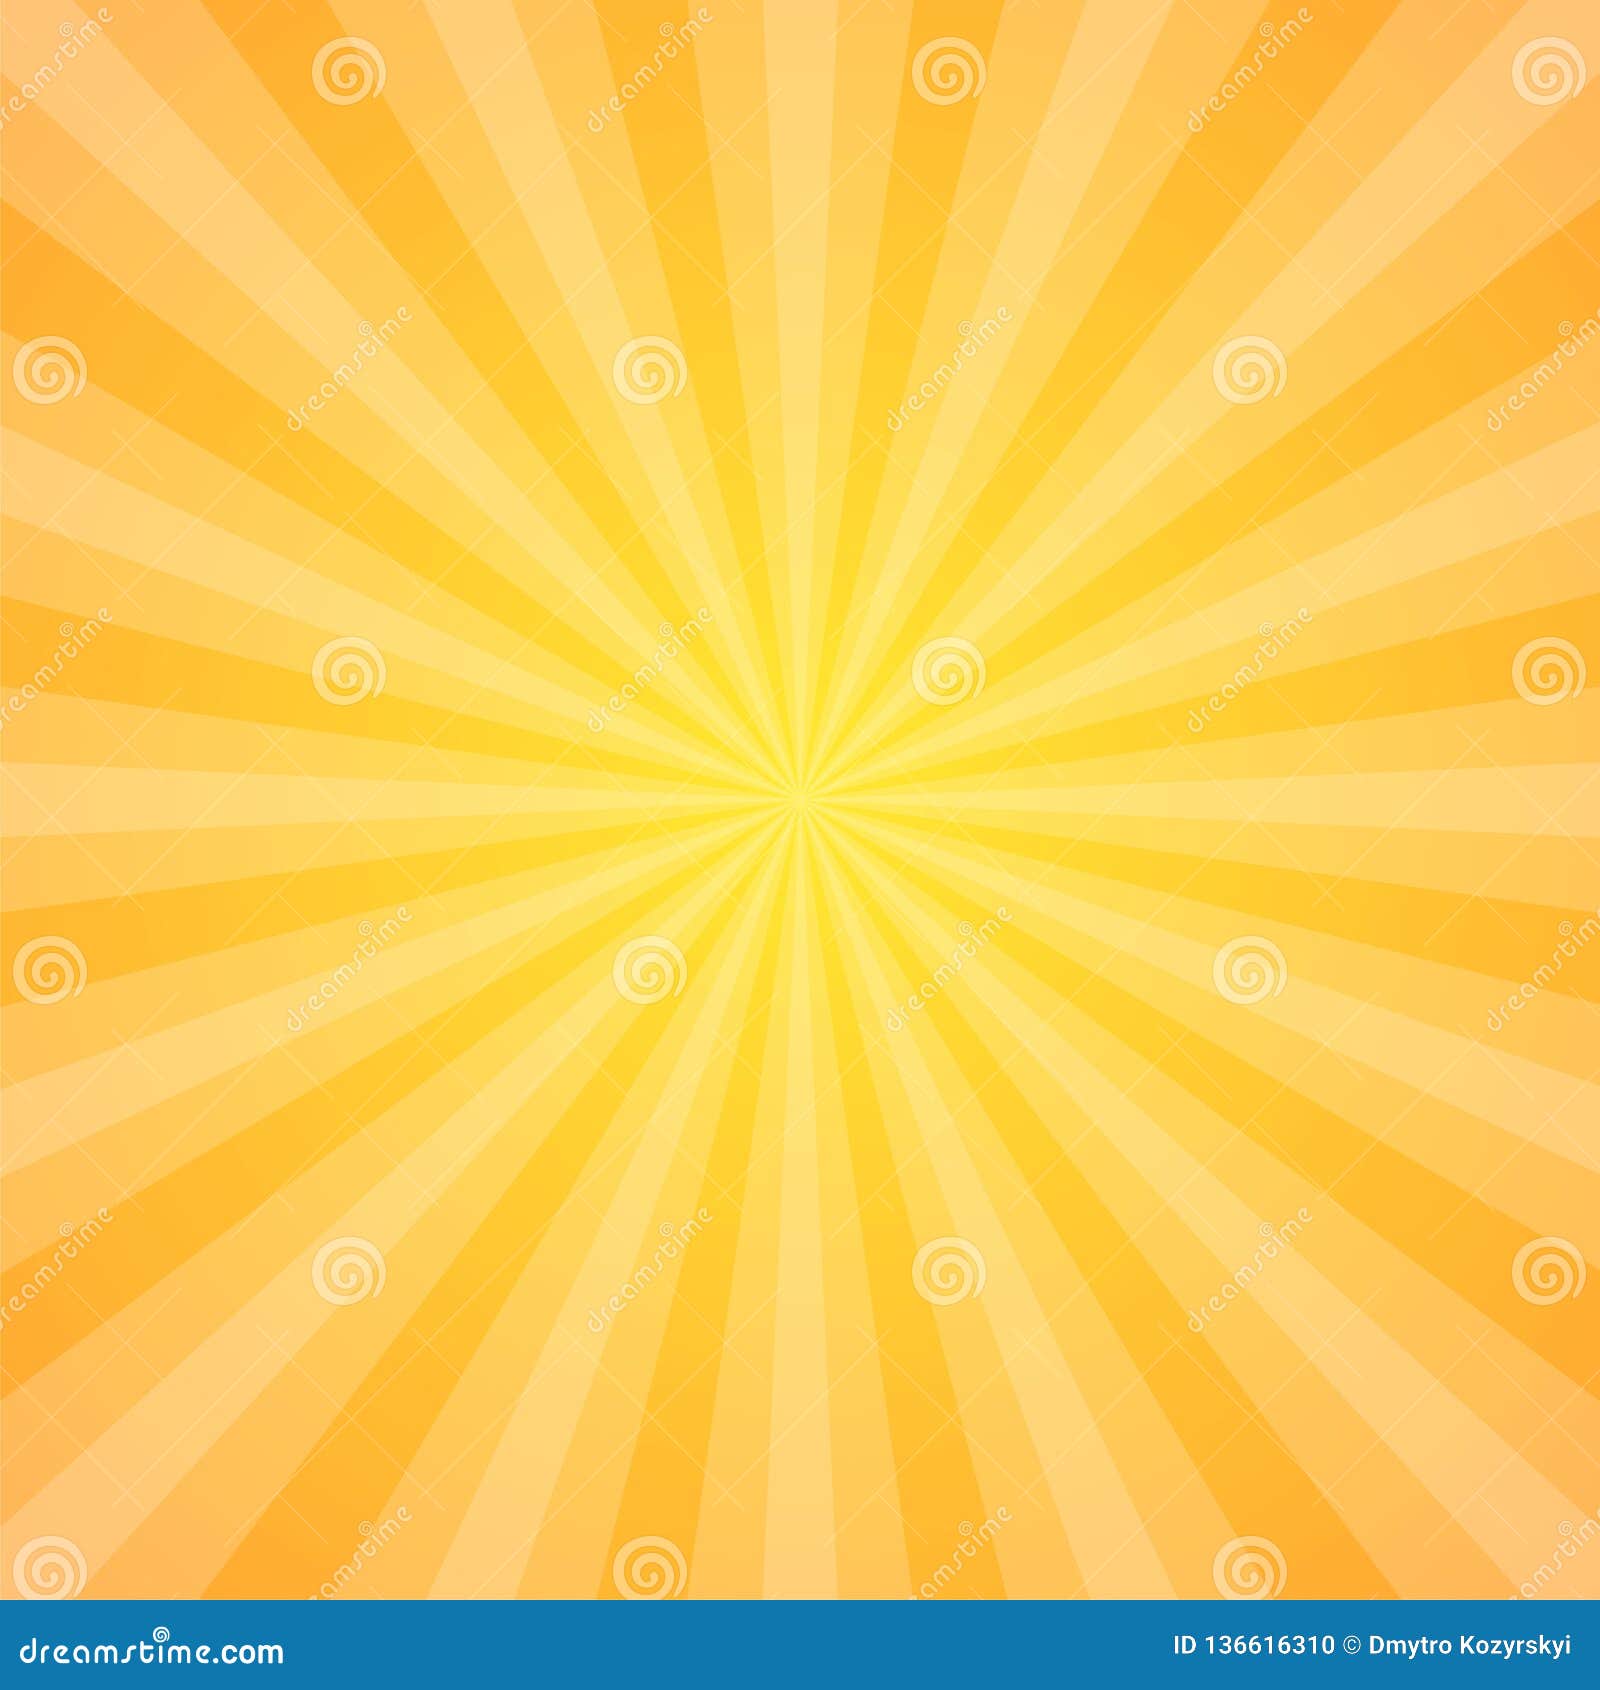 Sun Rays Vector Illustration Rays Background Sun Ray Theme Abstract Wallpaper Design Elements In Vintage Style Web Stock Vector Illustration Of Orange Pinwheel